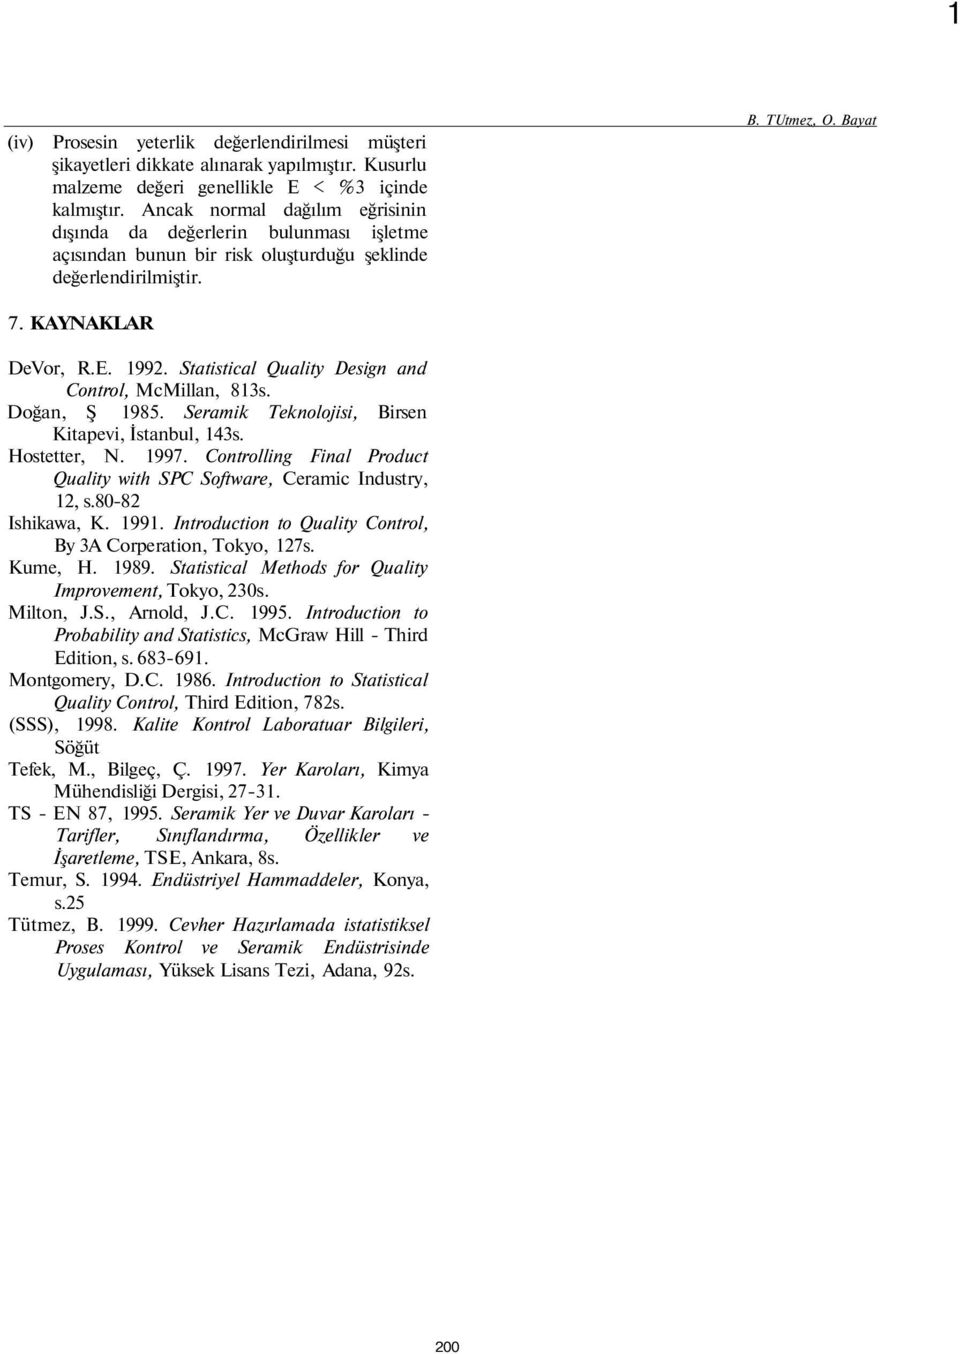 Statistical Quality Design and Control, McMillan, 81s. Doğan, Ş 198. Seramik Teknolojisi, Birsen Kitapevi, İstanbul, 1s. Hostetter, N. 1997.